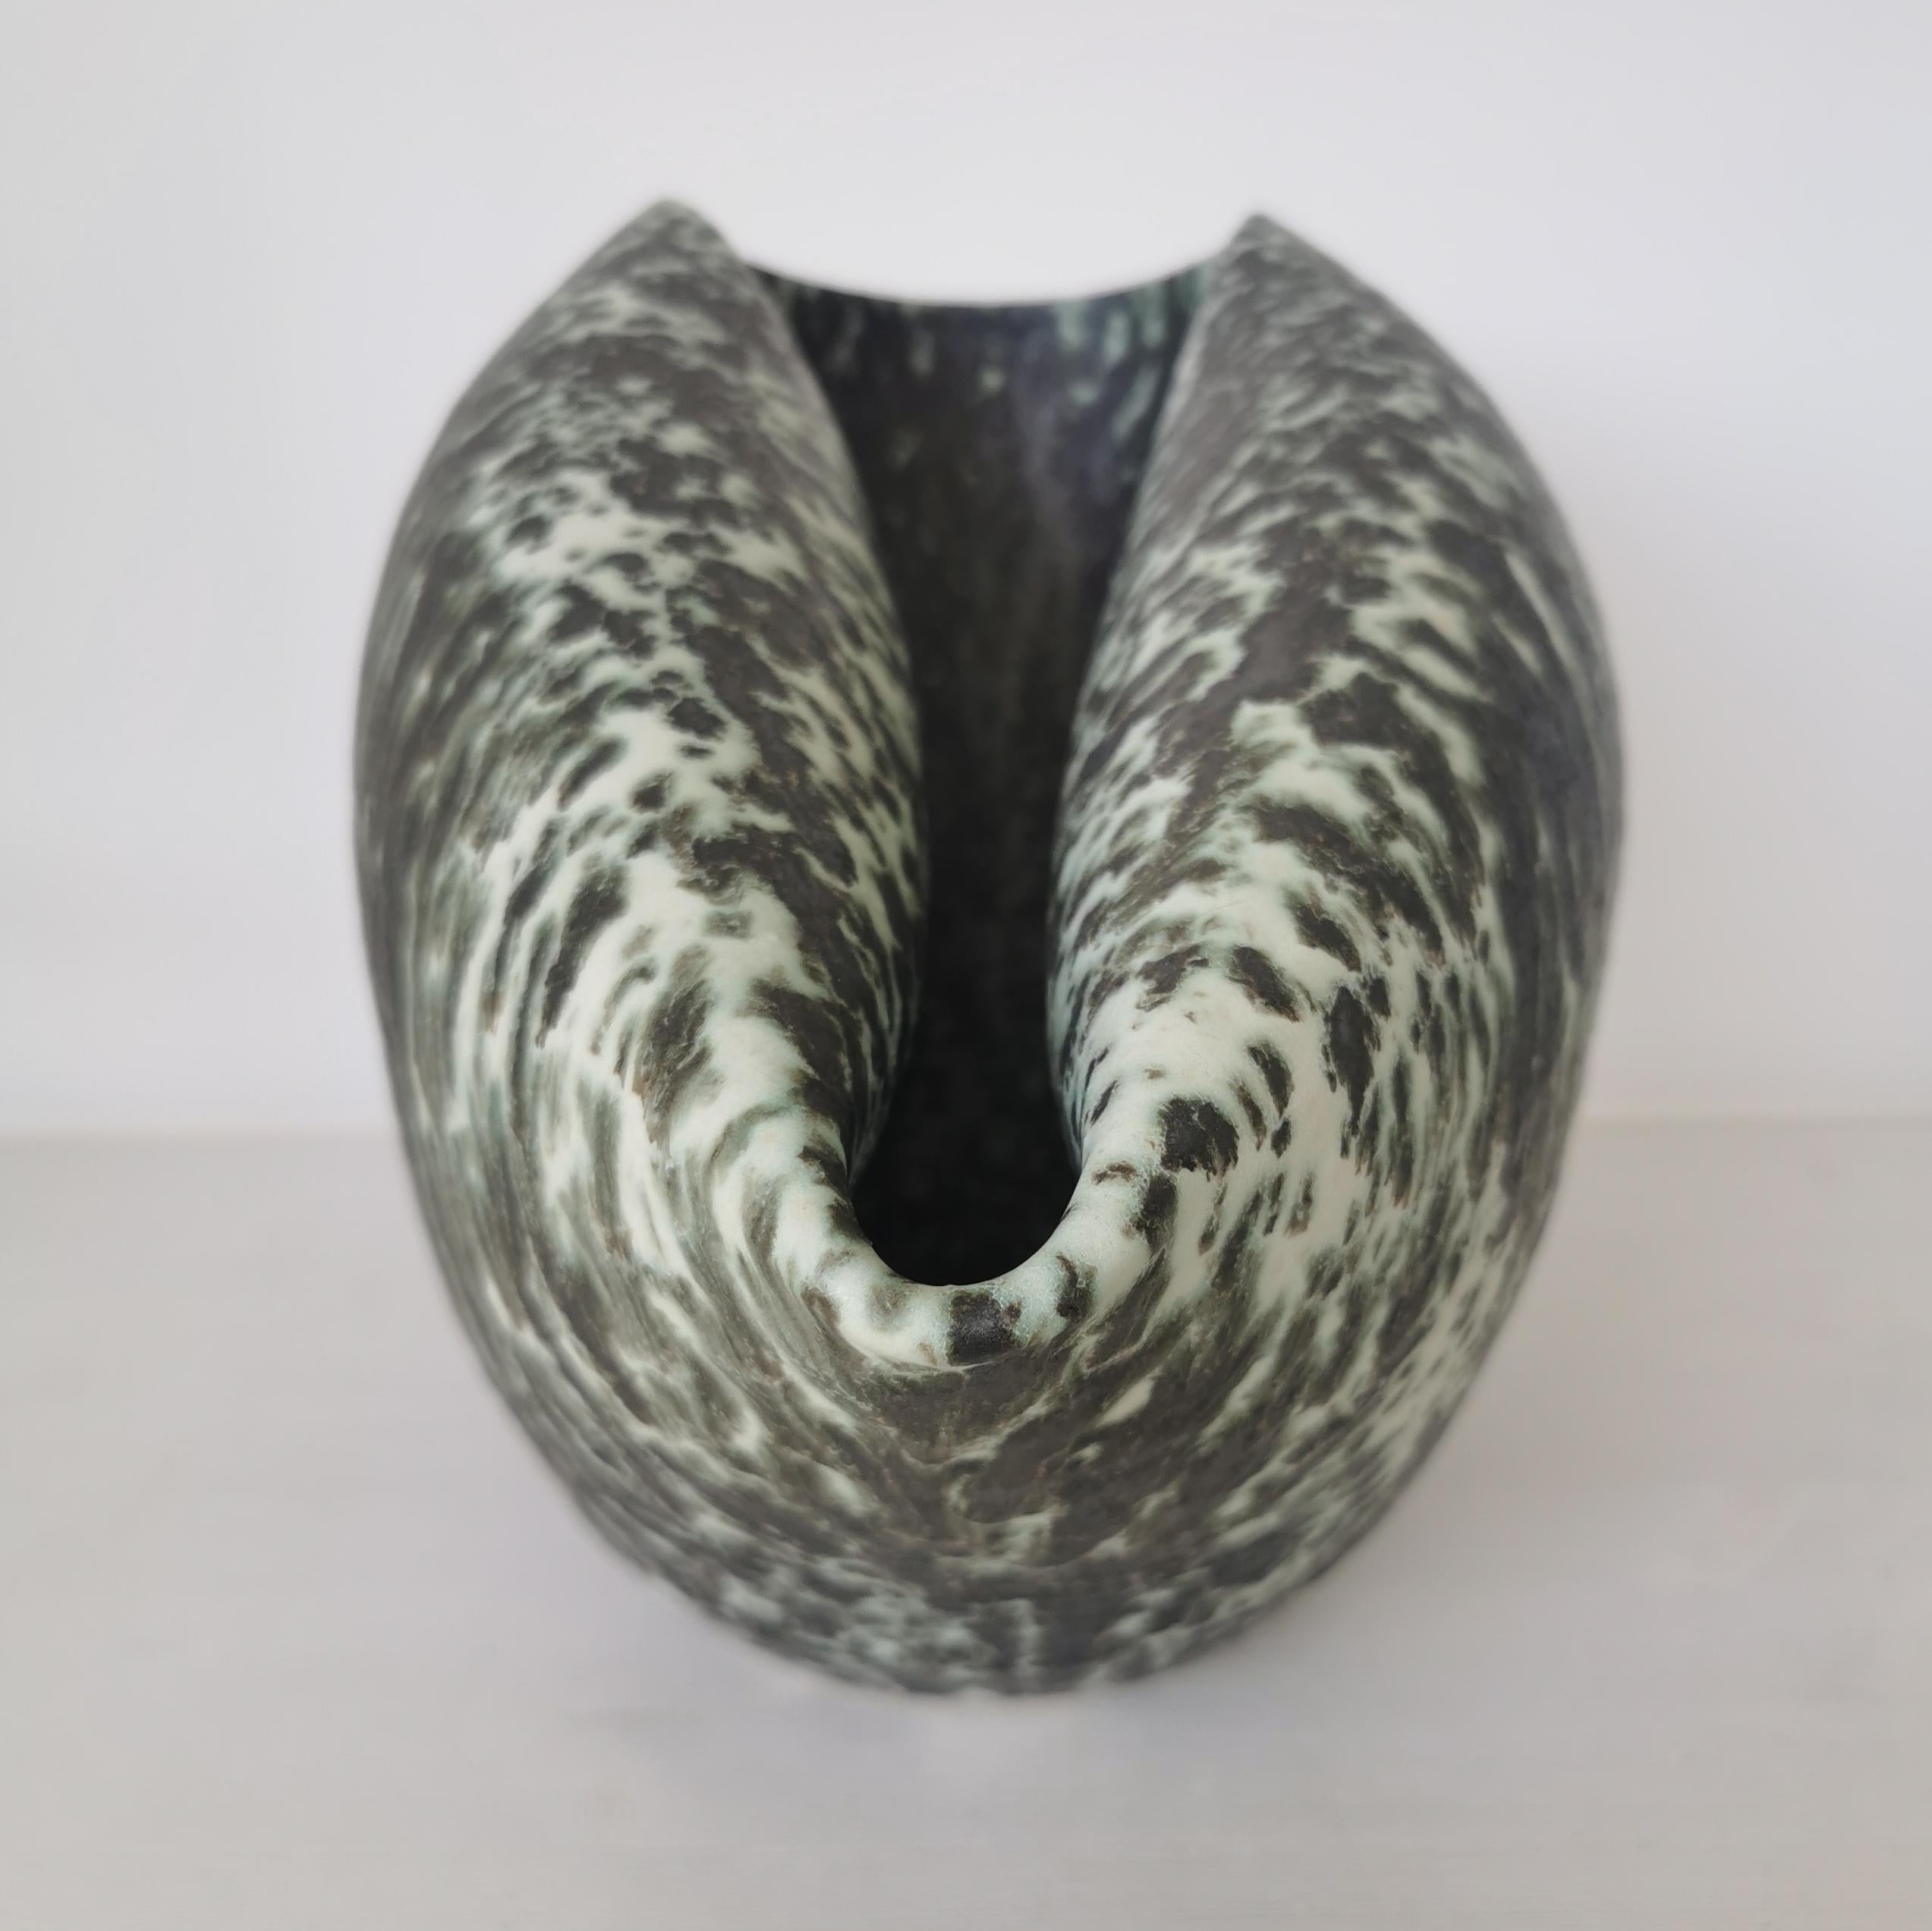 Oval Form with Green and Black Speckled Glaze, Vessel No.98, Ceramic Sculpture For Sale 1